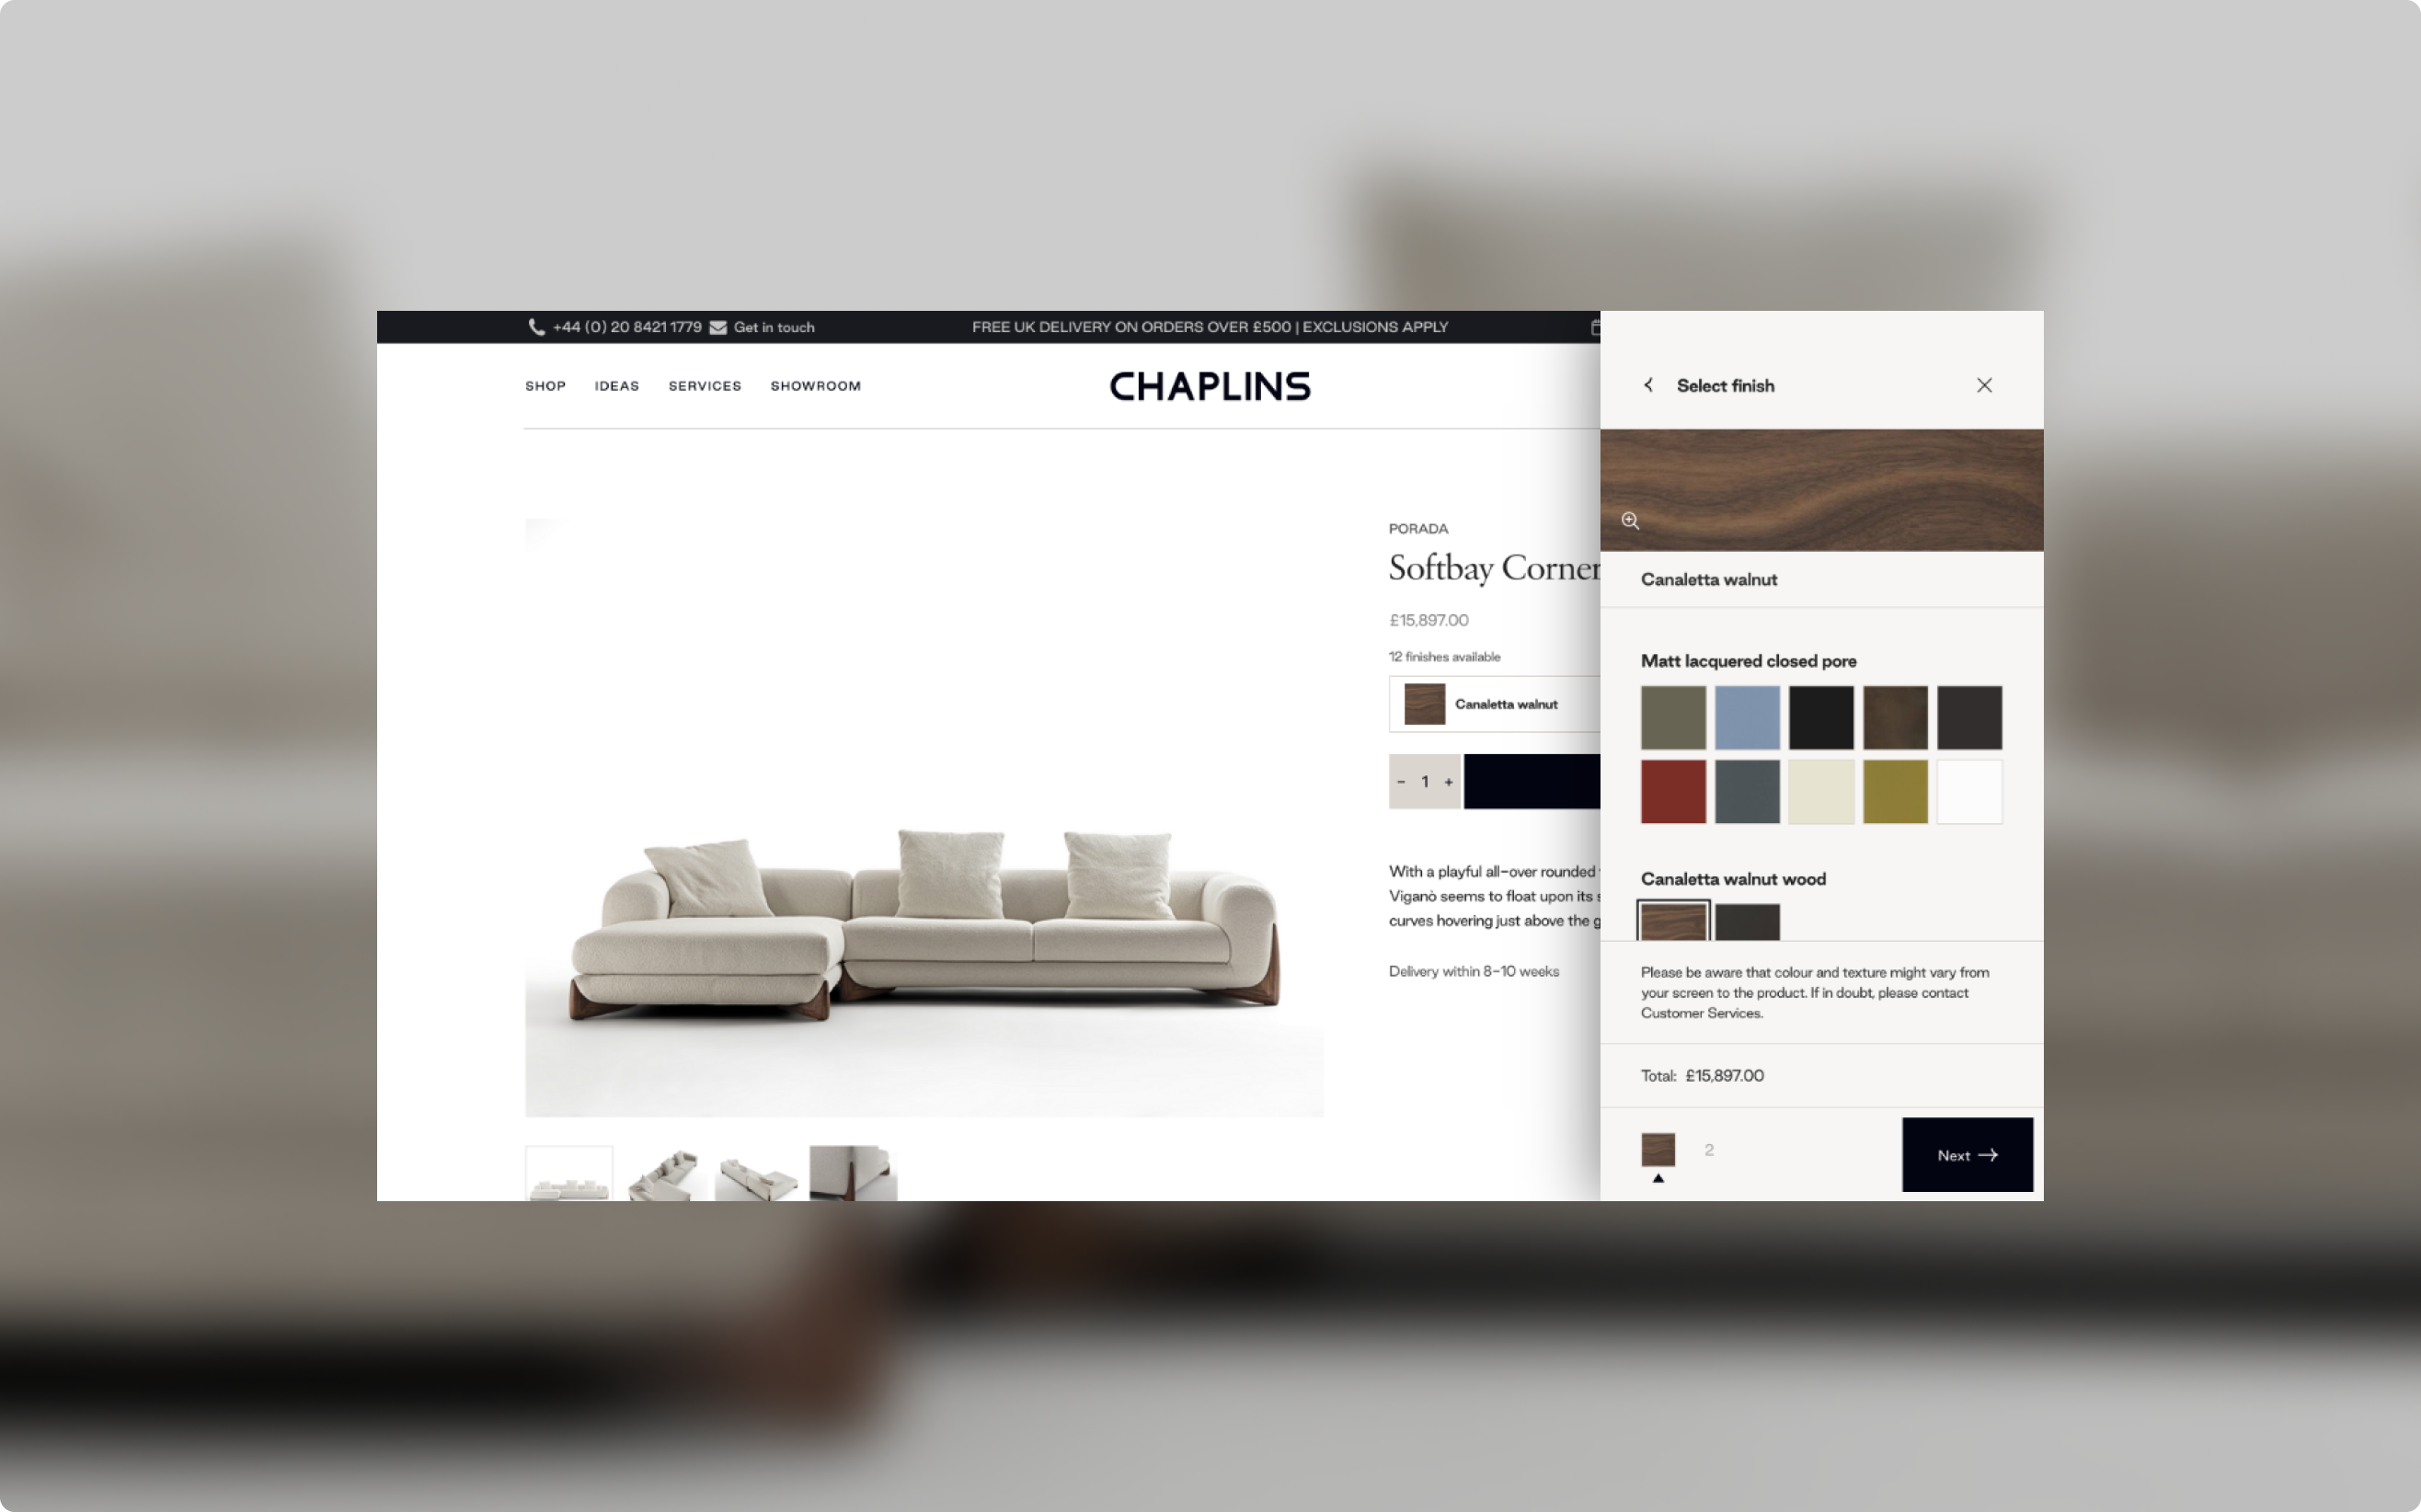 Chaplins configurator on desktop showing sofa options